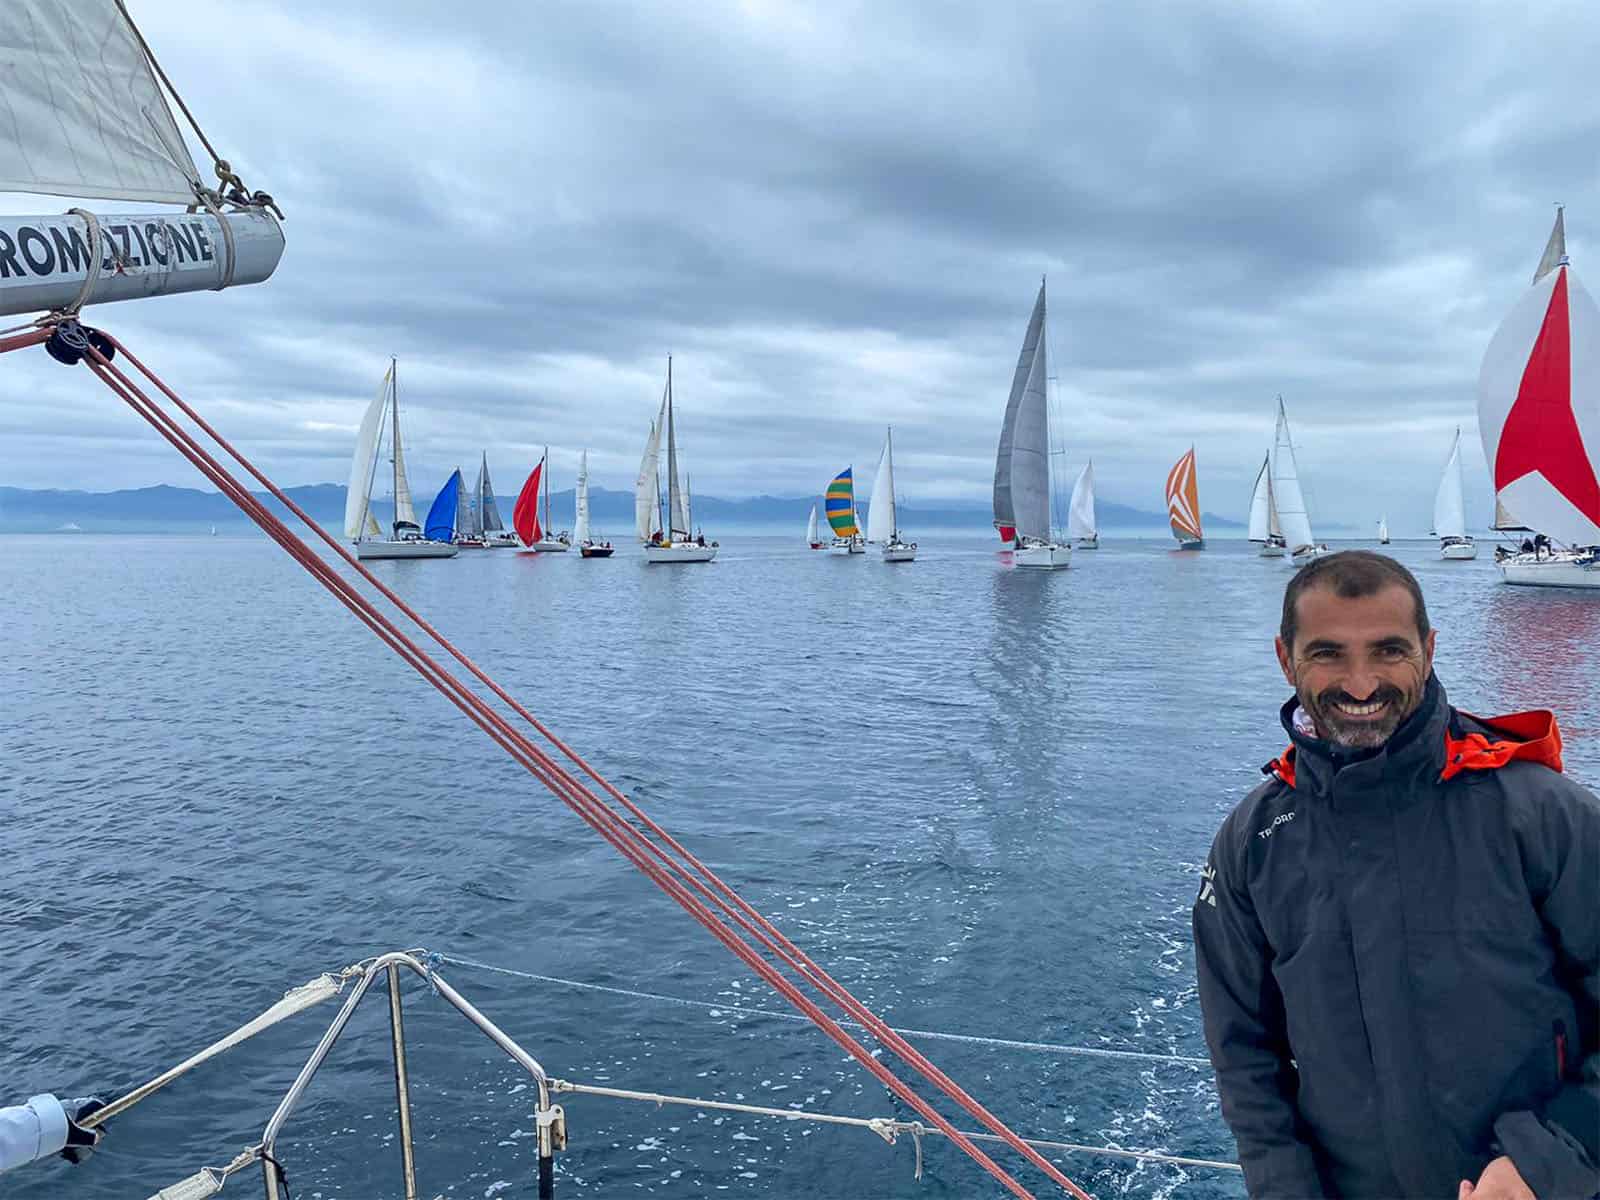 Corsi e regate agonistiche di vela in Sardegna - Partenza di una regata